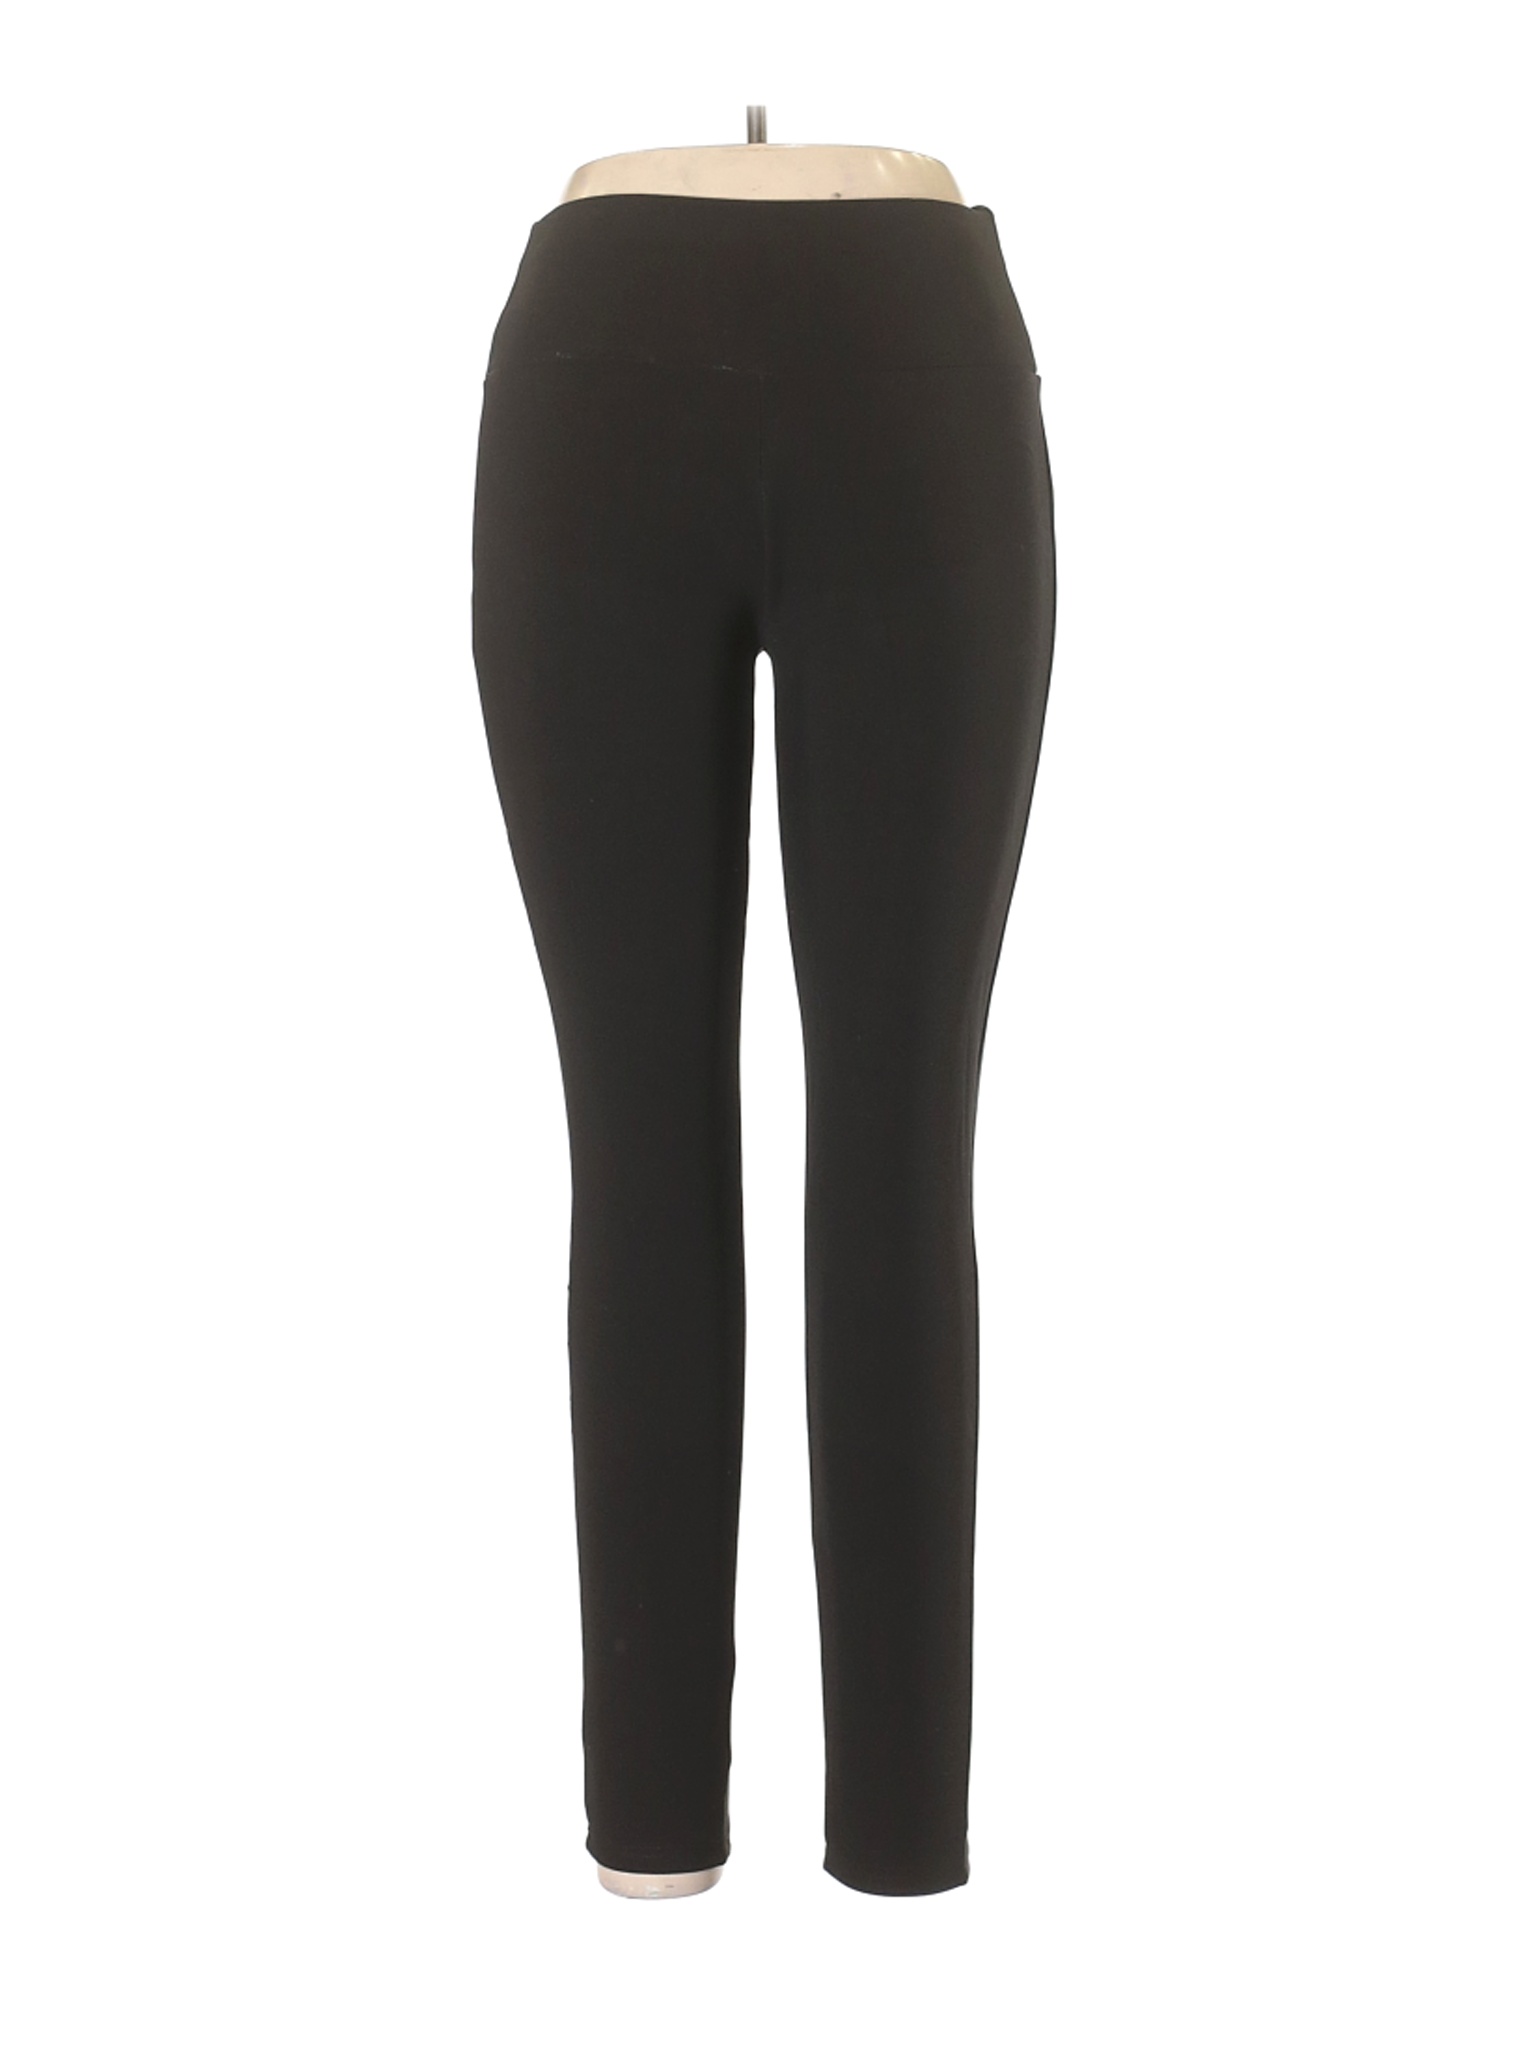 INDERO Women Black Casual Pants L | eBay